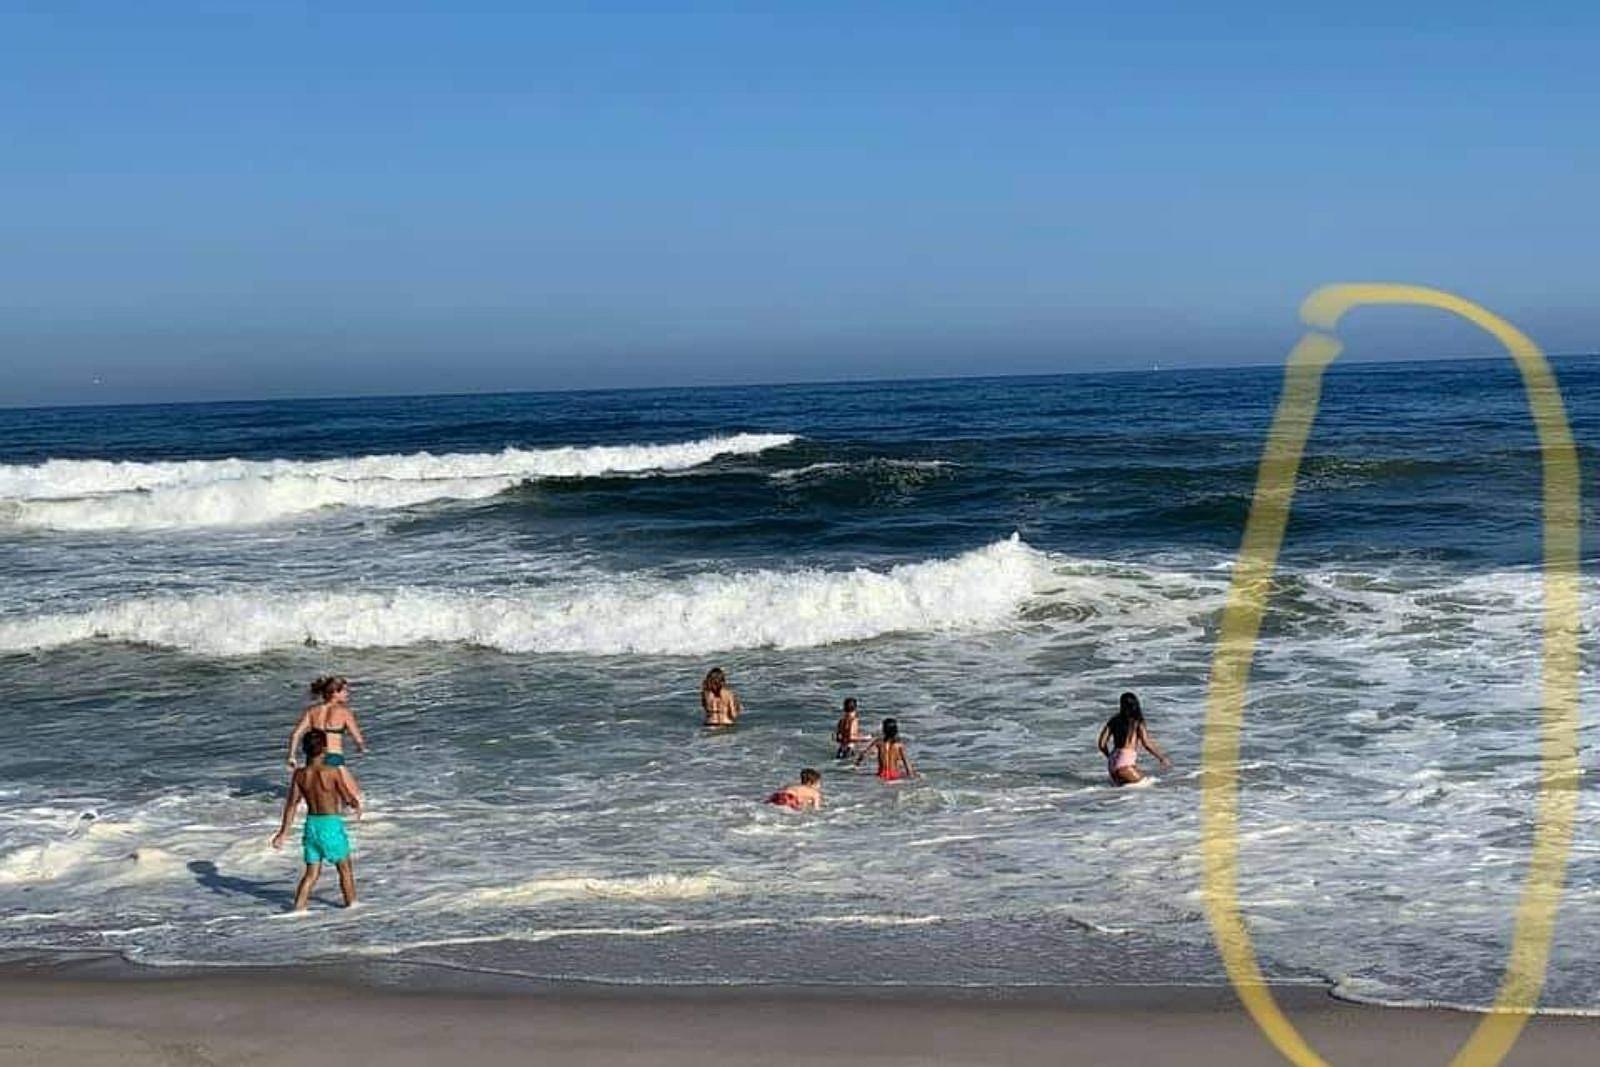 NJ rip currents at NJ ocean beaches: How to escape